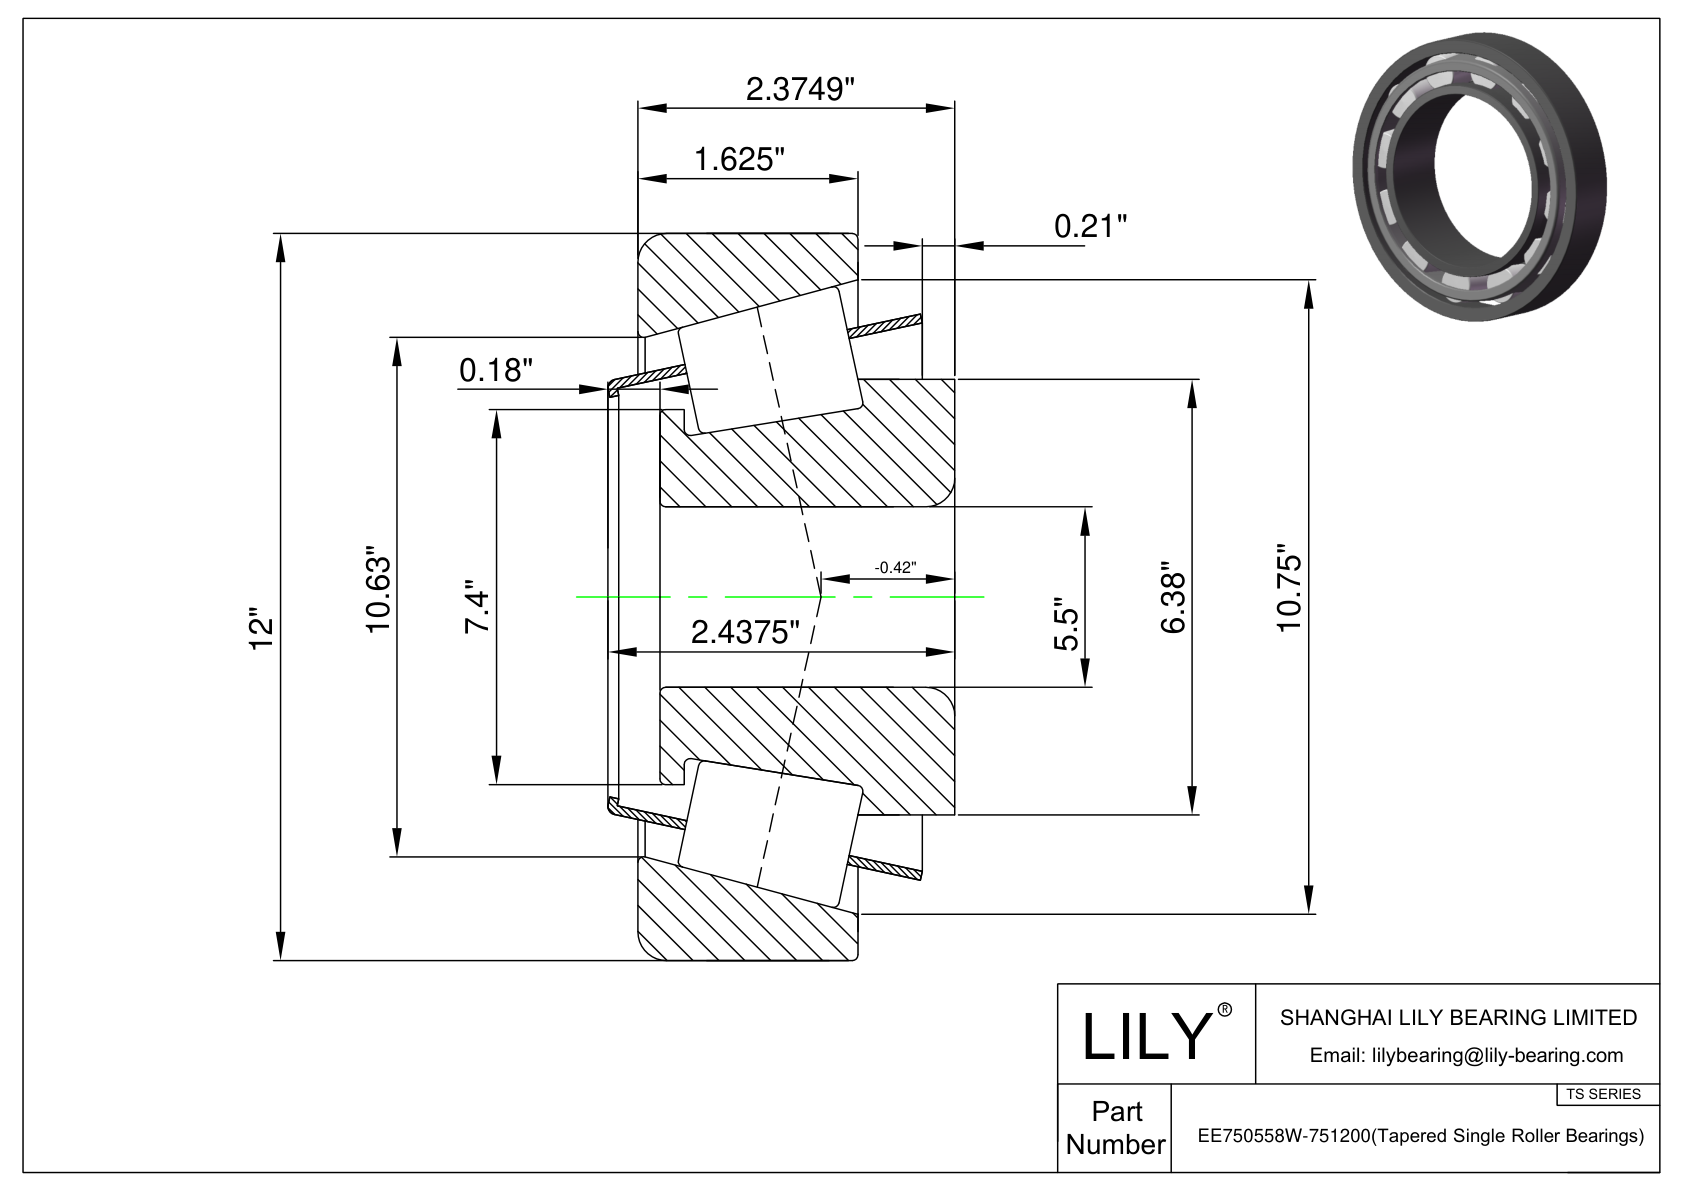 EE750558W-751200 TS系列(圆锥单滚子轴承)(英制) CAD图形